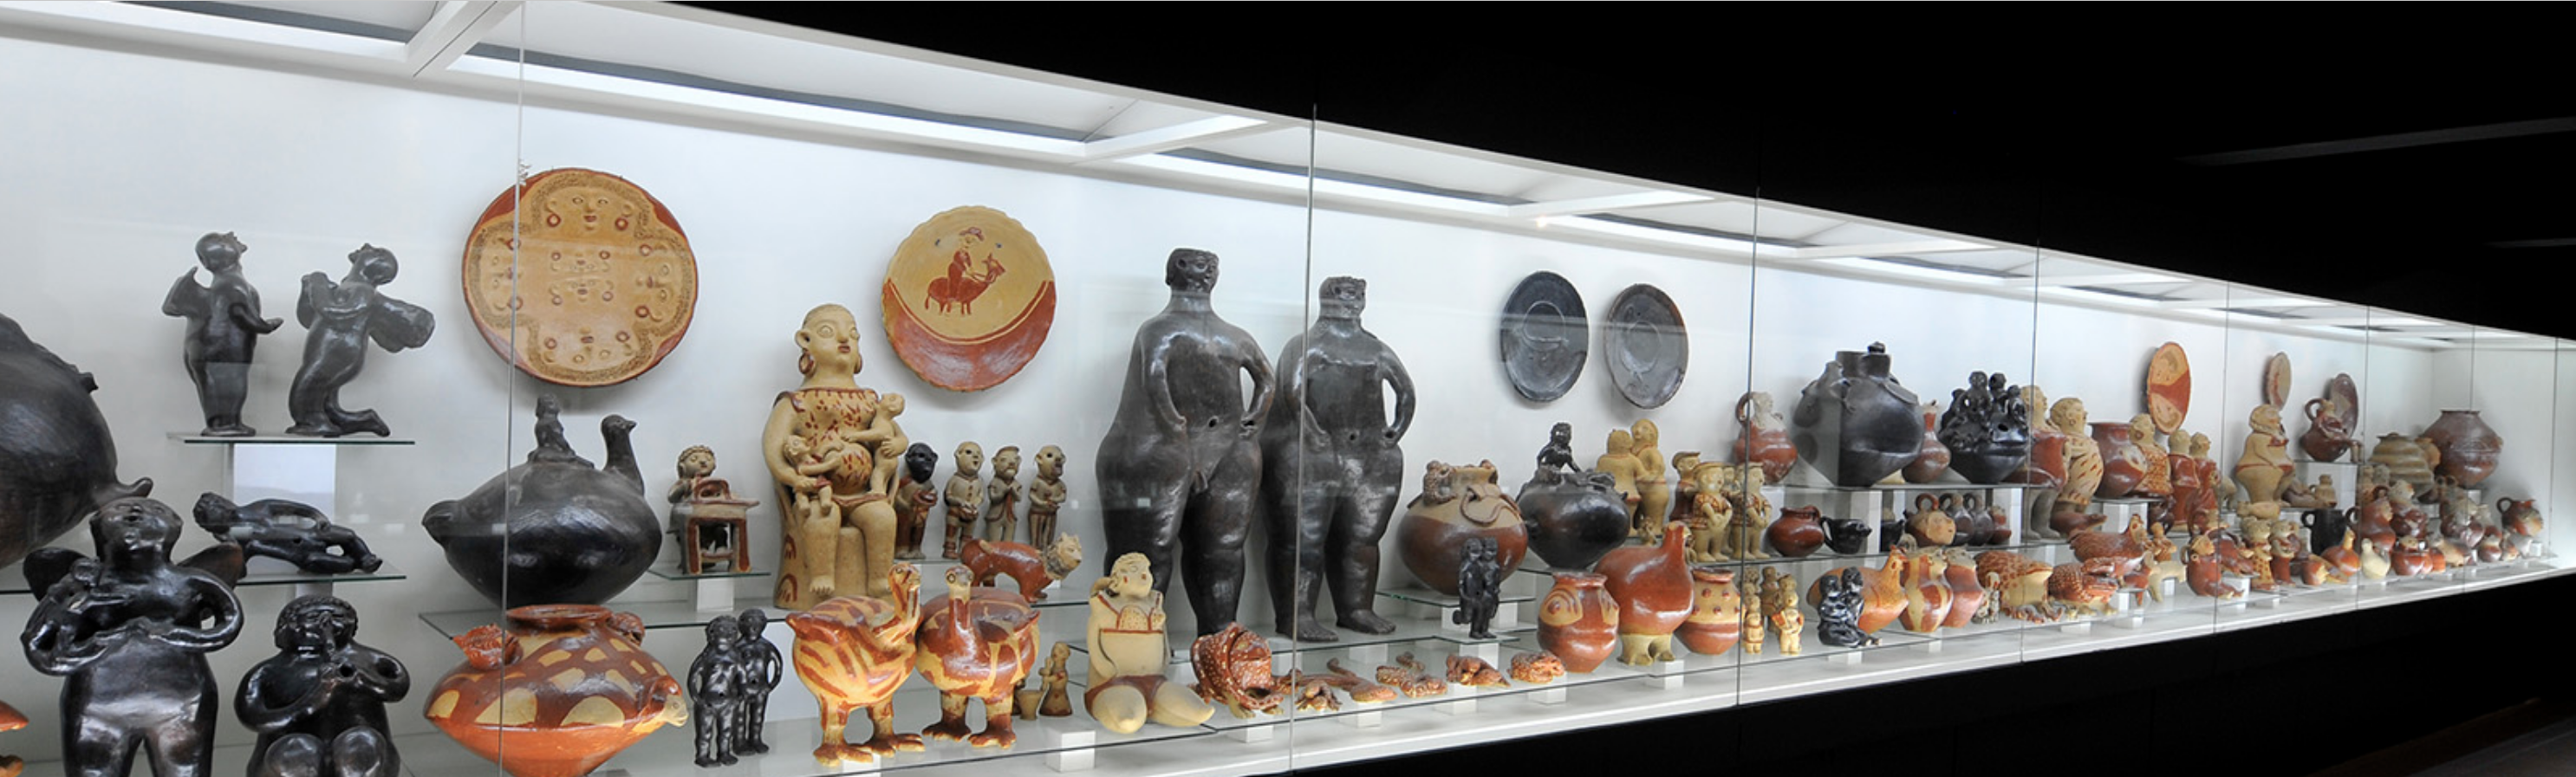 Barro. Ceramics display